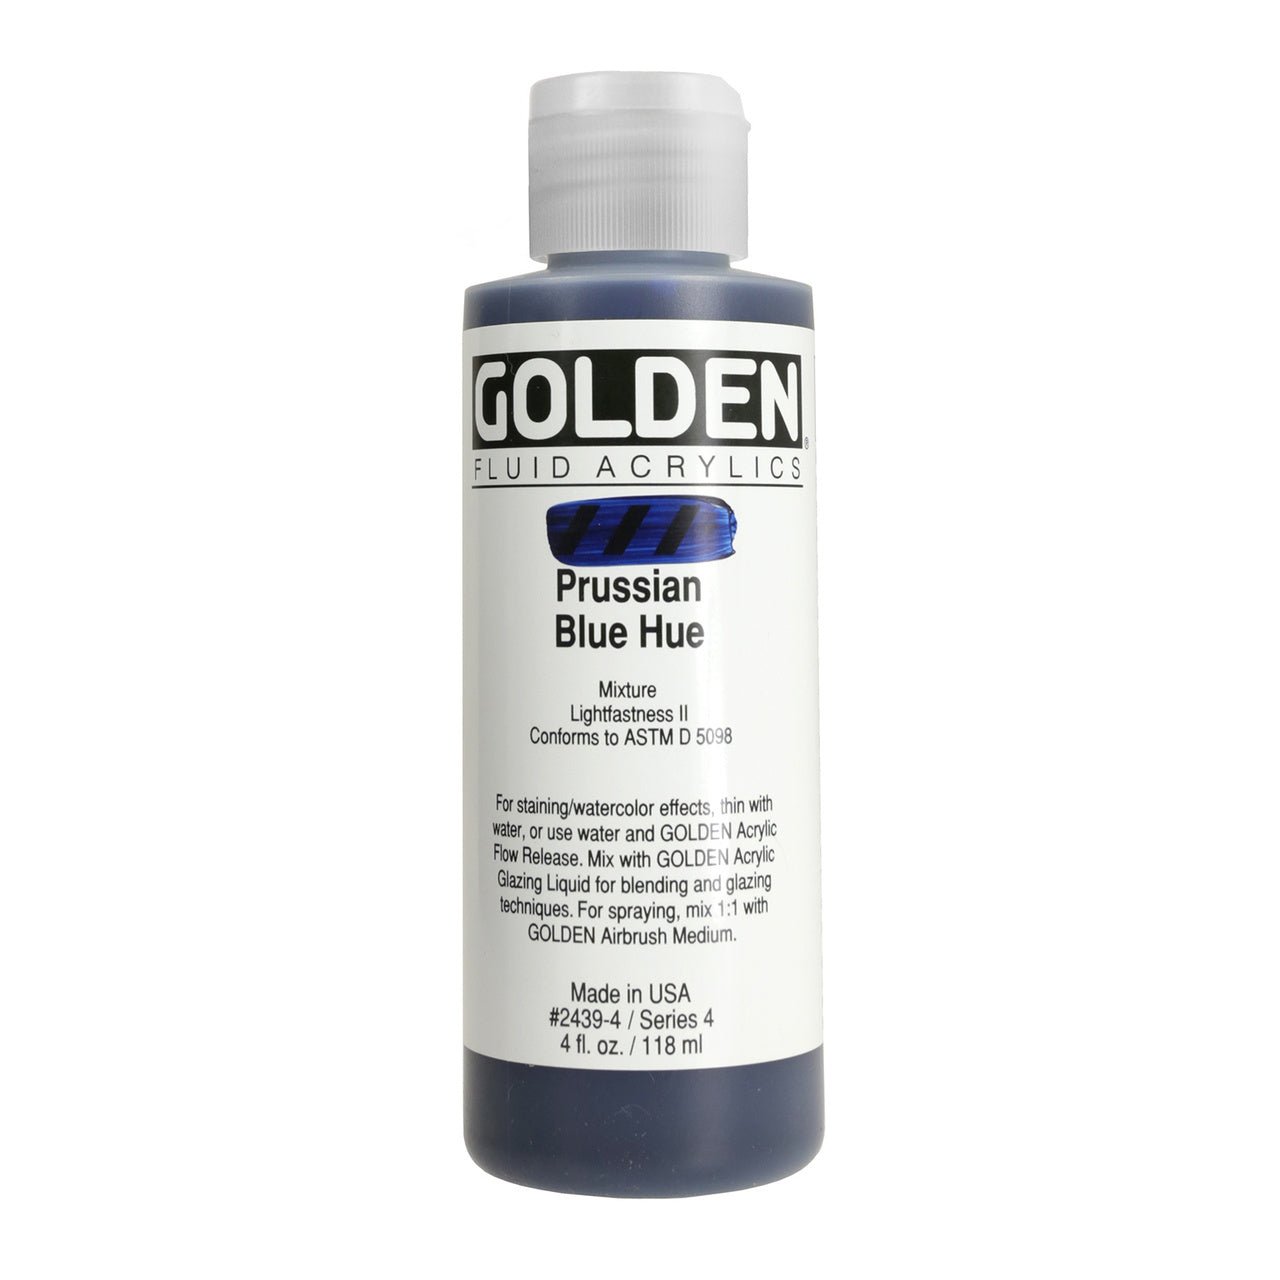 Golden Fluid Acrylic Prussian Blue Hue 4 oz - merriartist.com